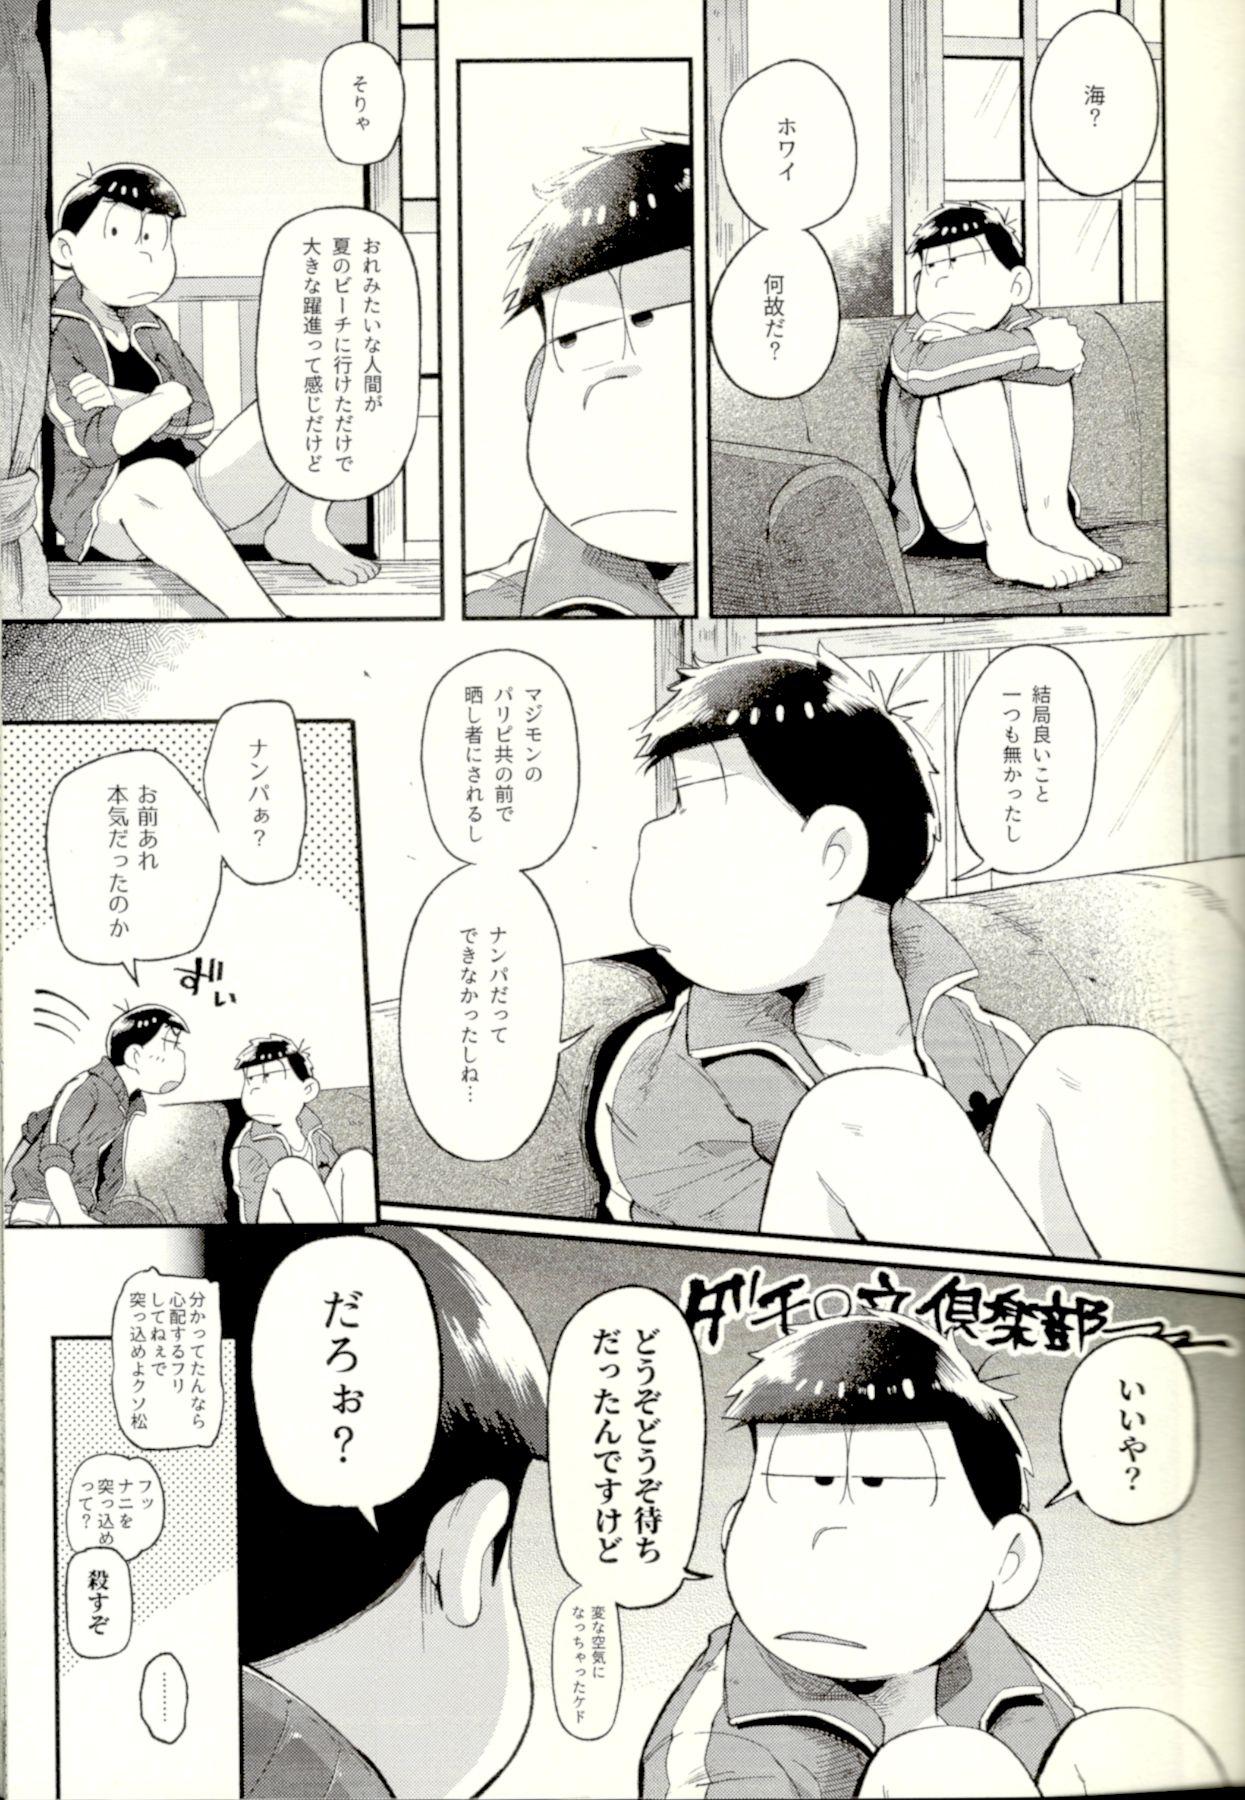 Farting Season in the Summer - Osomatsu san 3way - Page 7